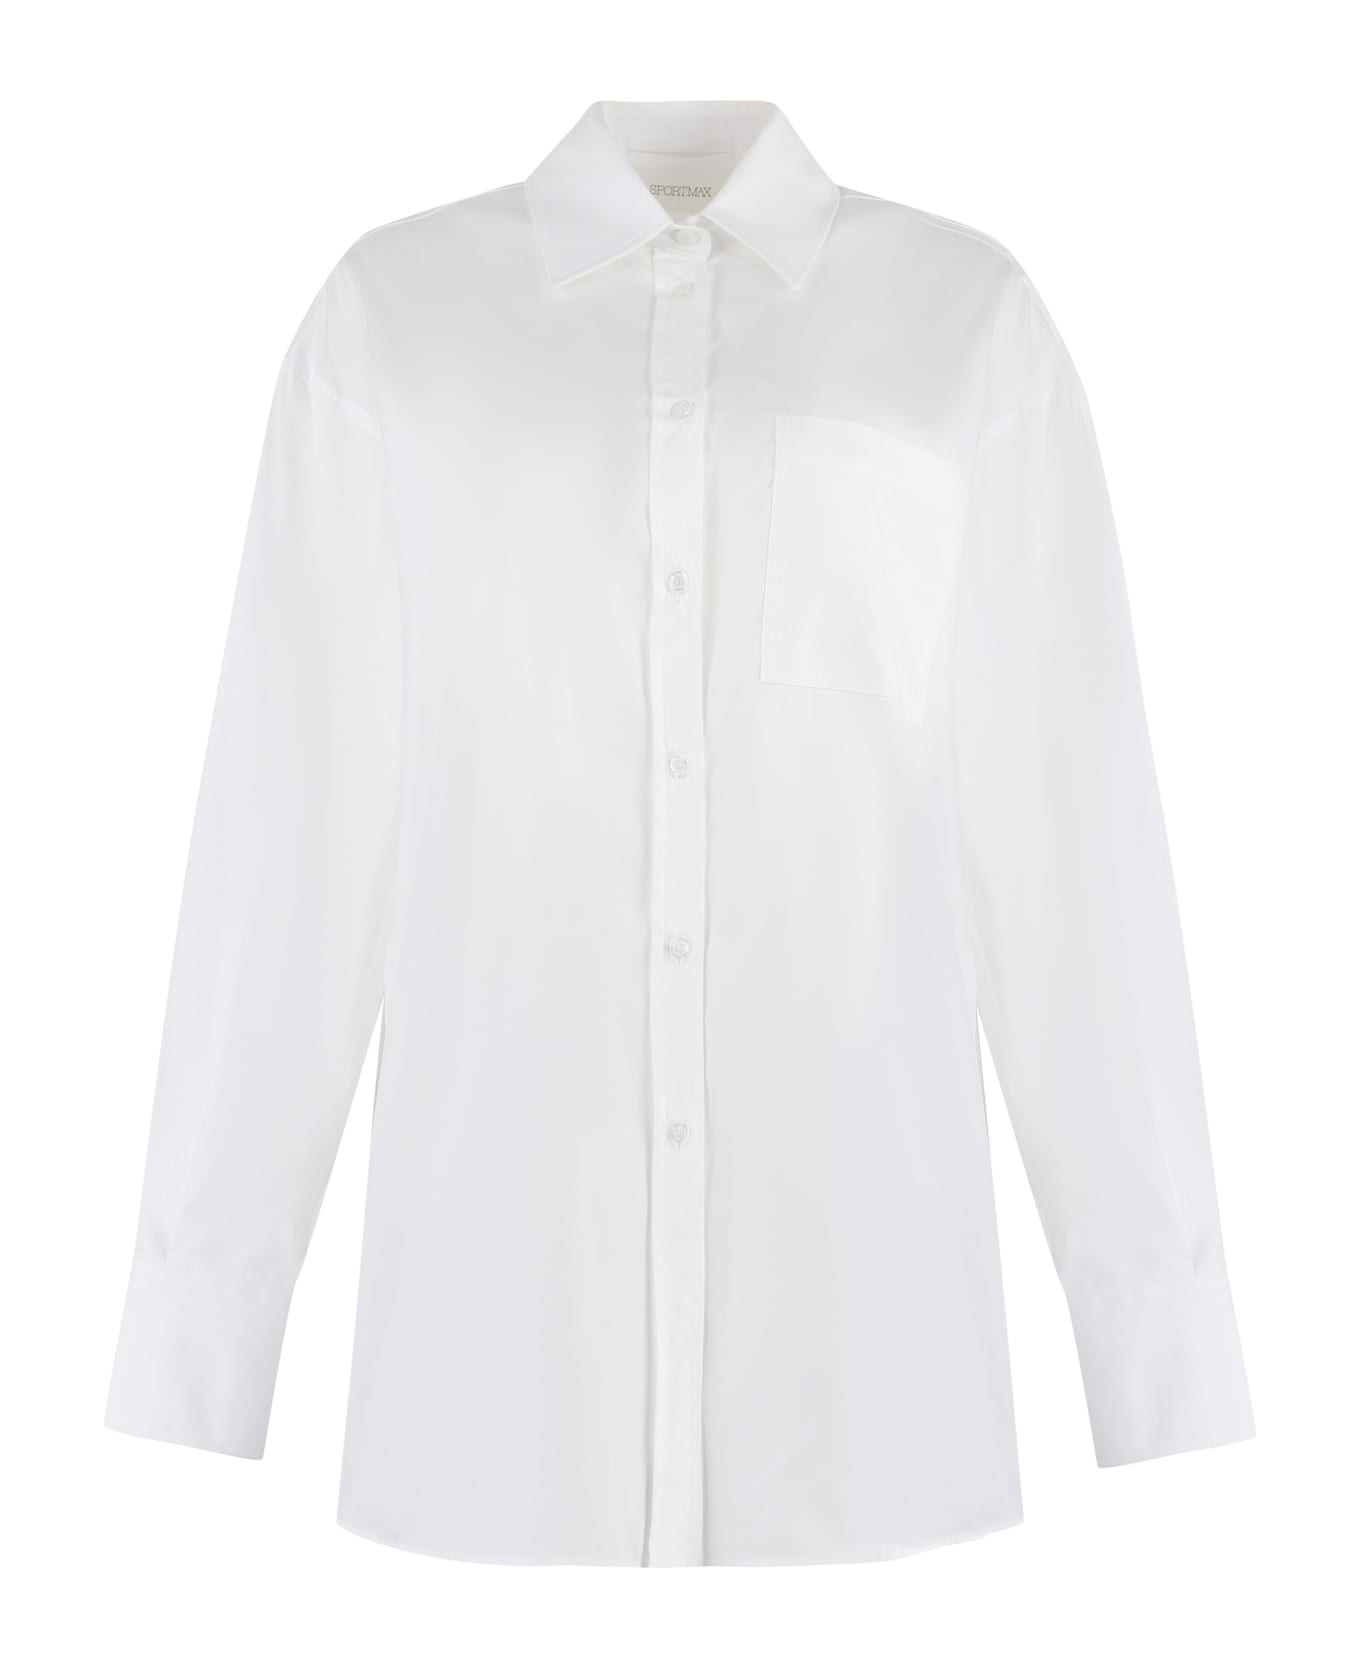 SportMax Rostov Oxford Shirt In Cotton - White